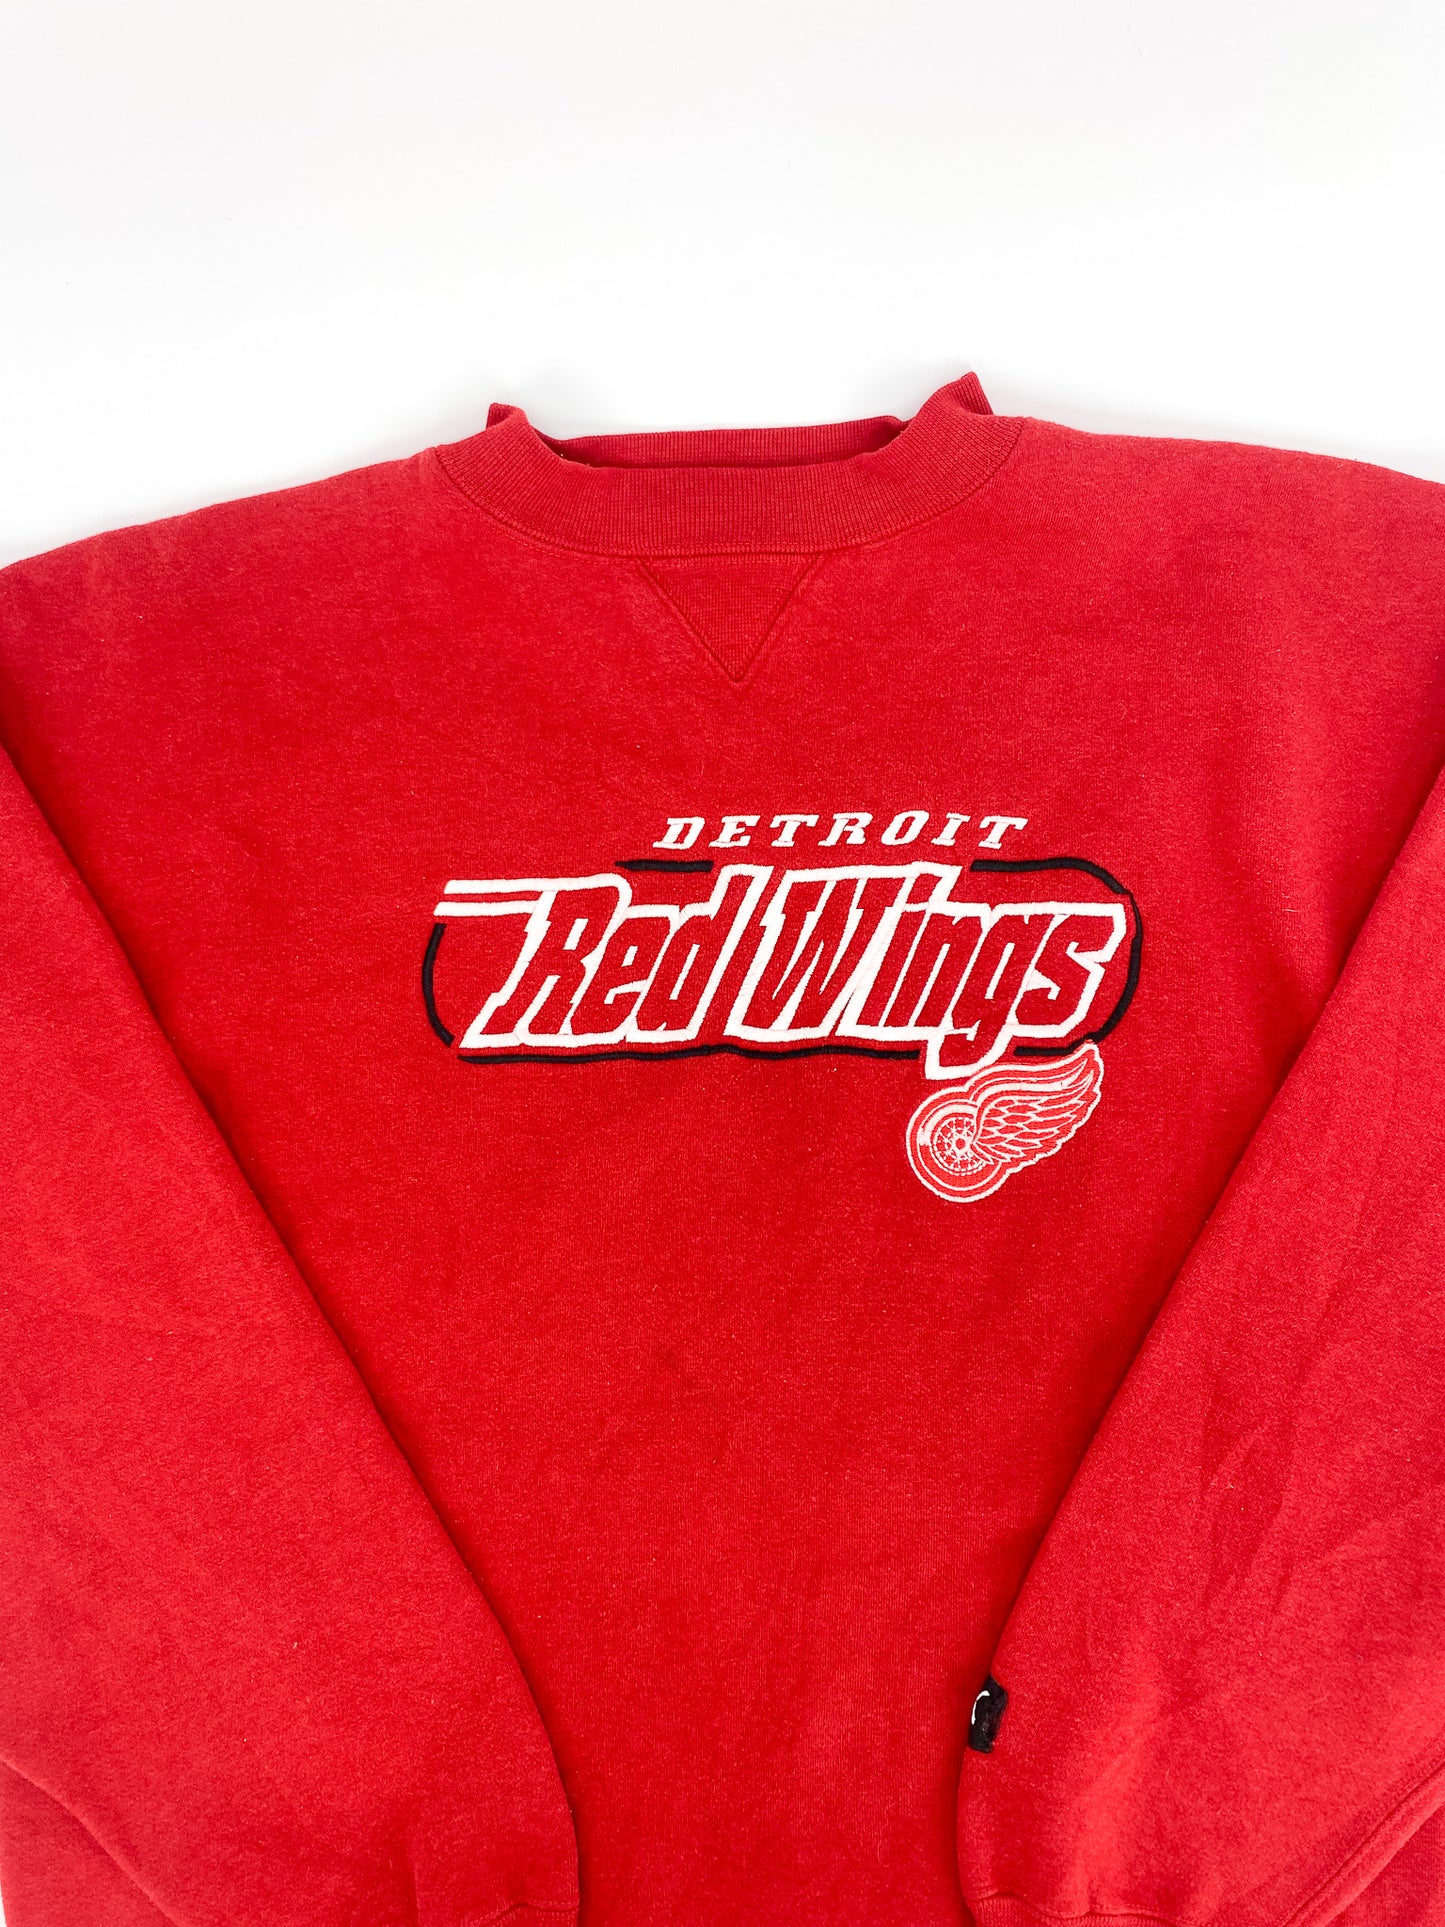 Vintage 90's Detroit Red Wings Jumper - XL